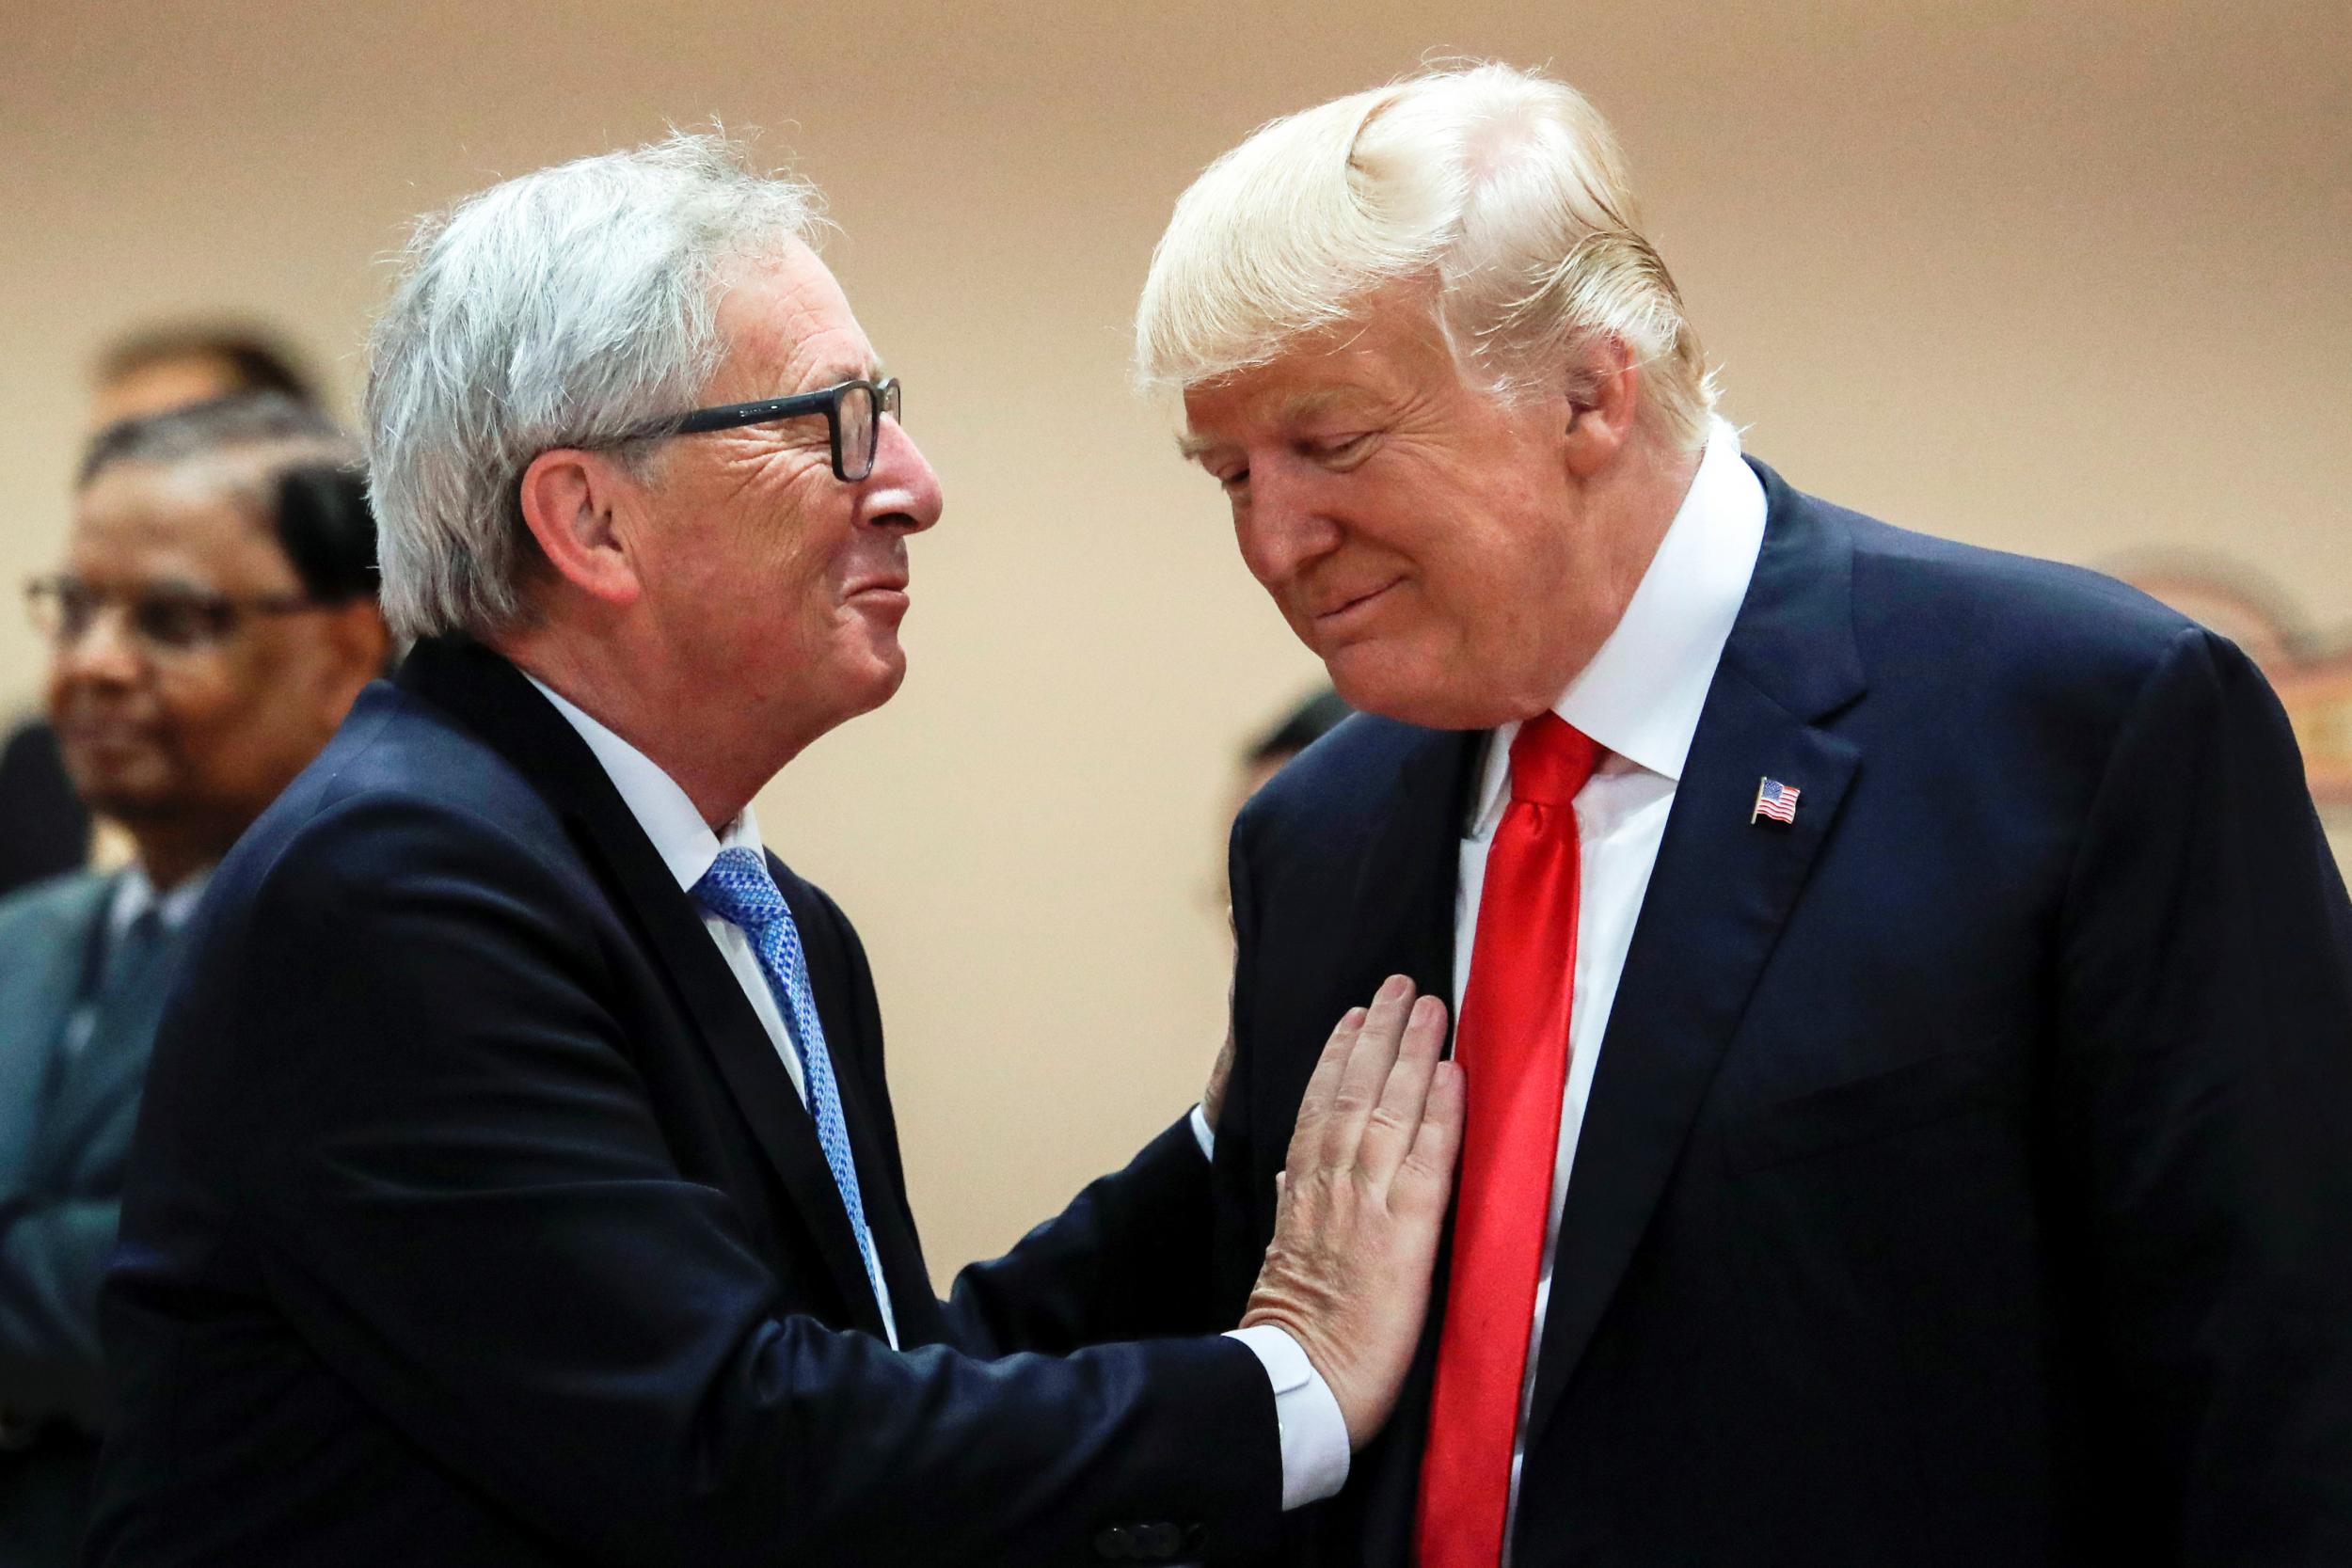 Donald Trump and Jean-Claude Juncker at a previous meeting